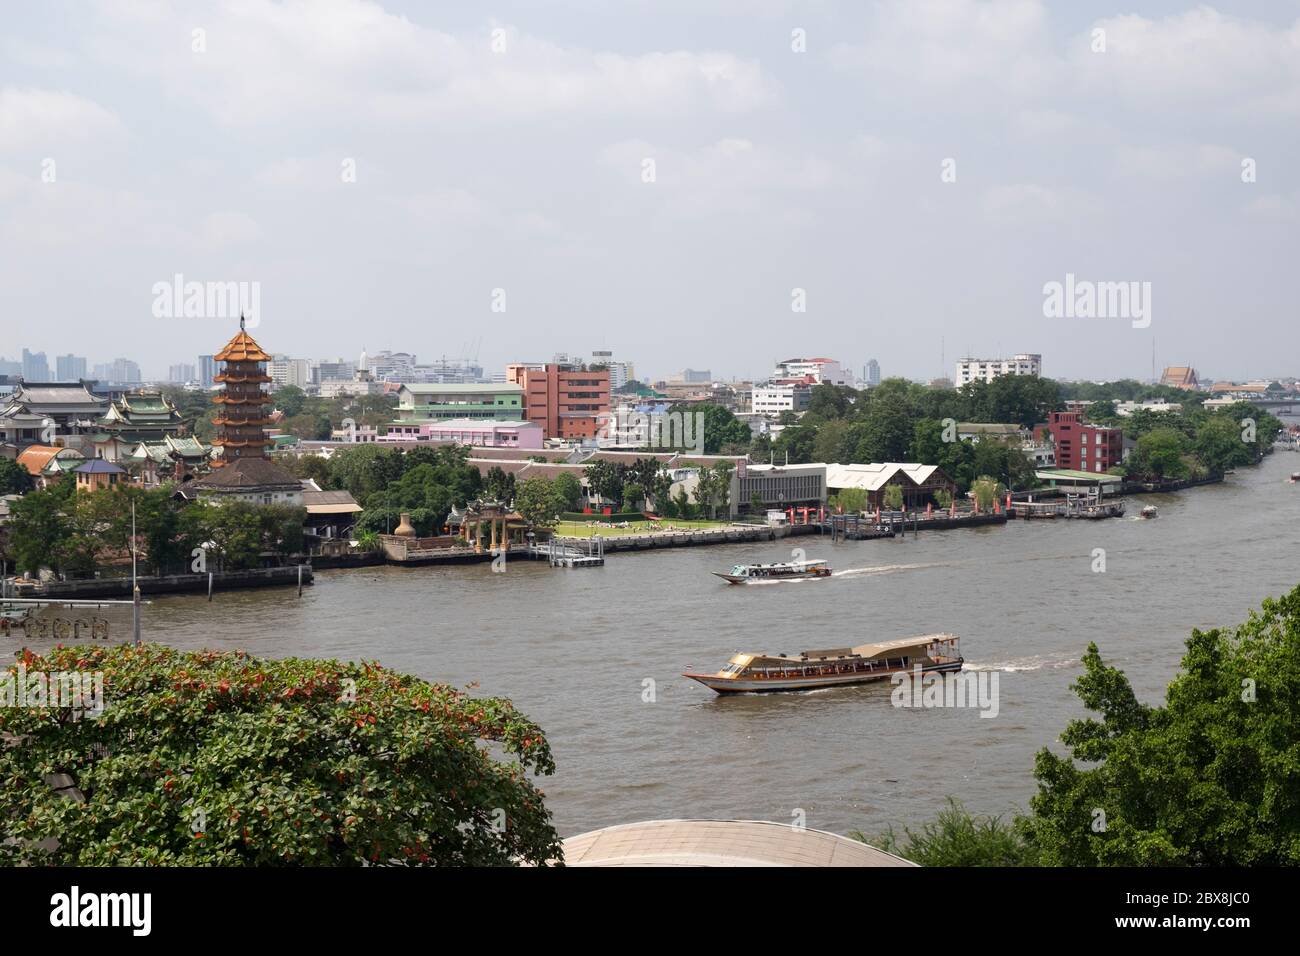 Sightseeing boat on the Chao Praya river, Bangkok, Thailand, Southeast Asia. Stock Photo